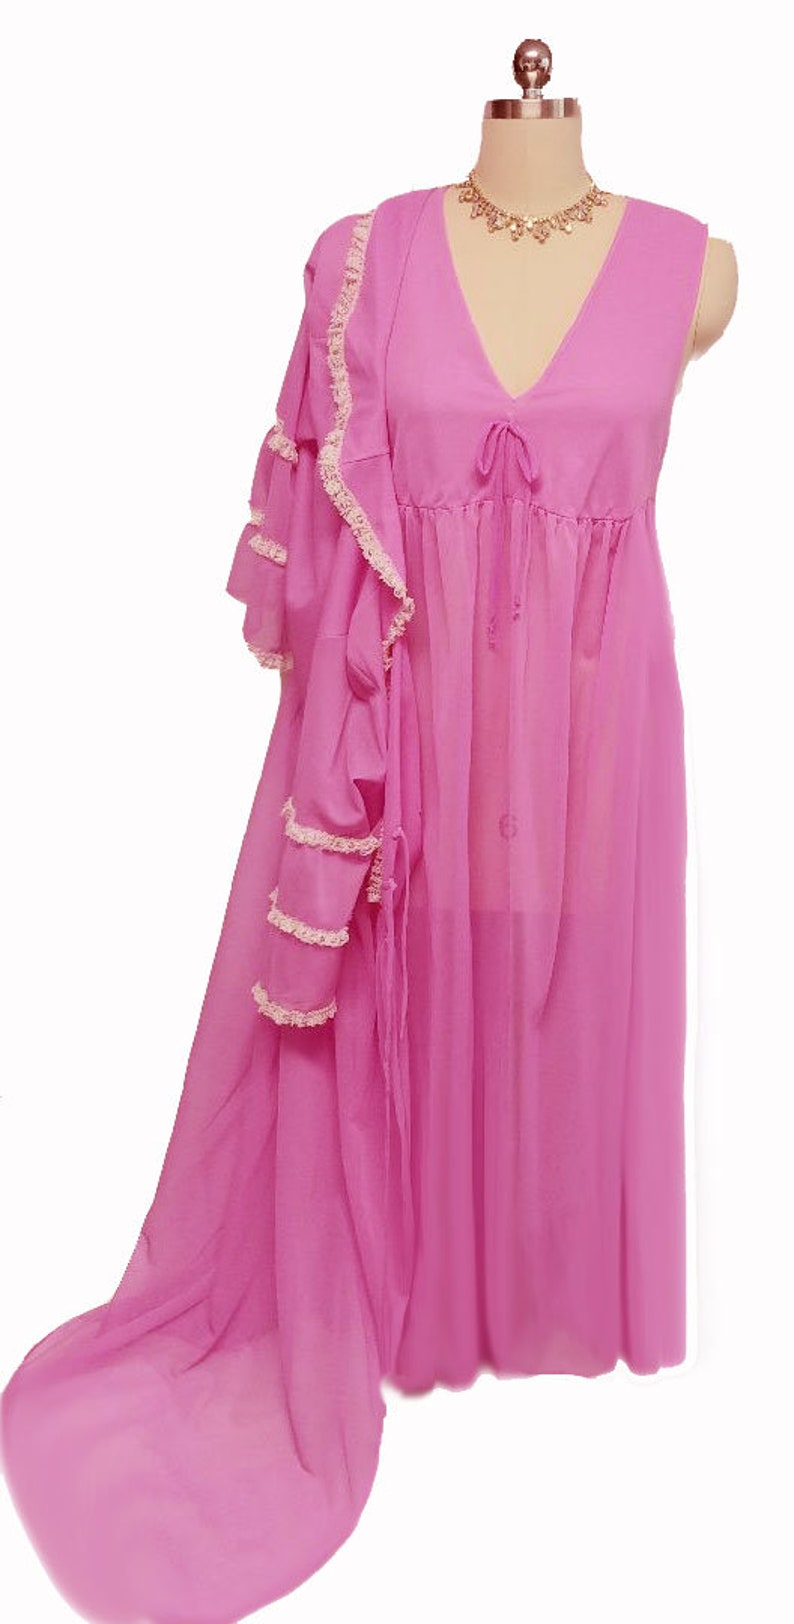 Vintage Lace Peignoir Nightgown Set Summer Orchid image 4